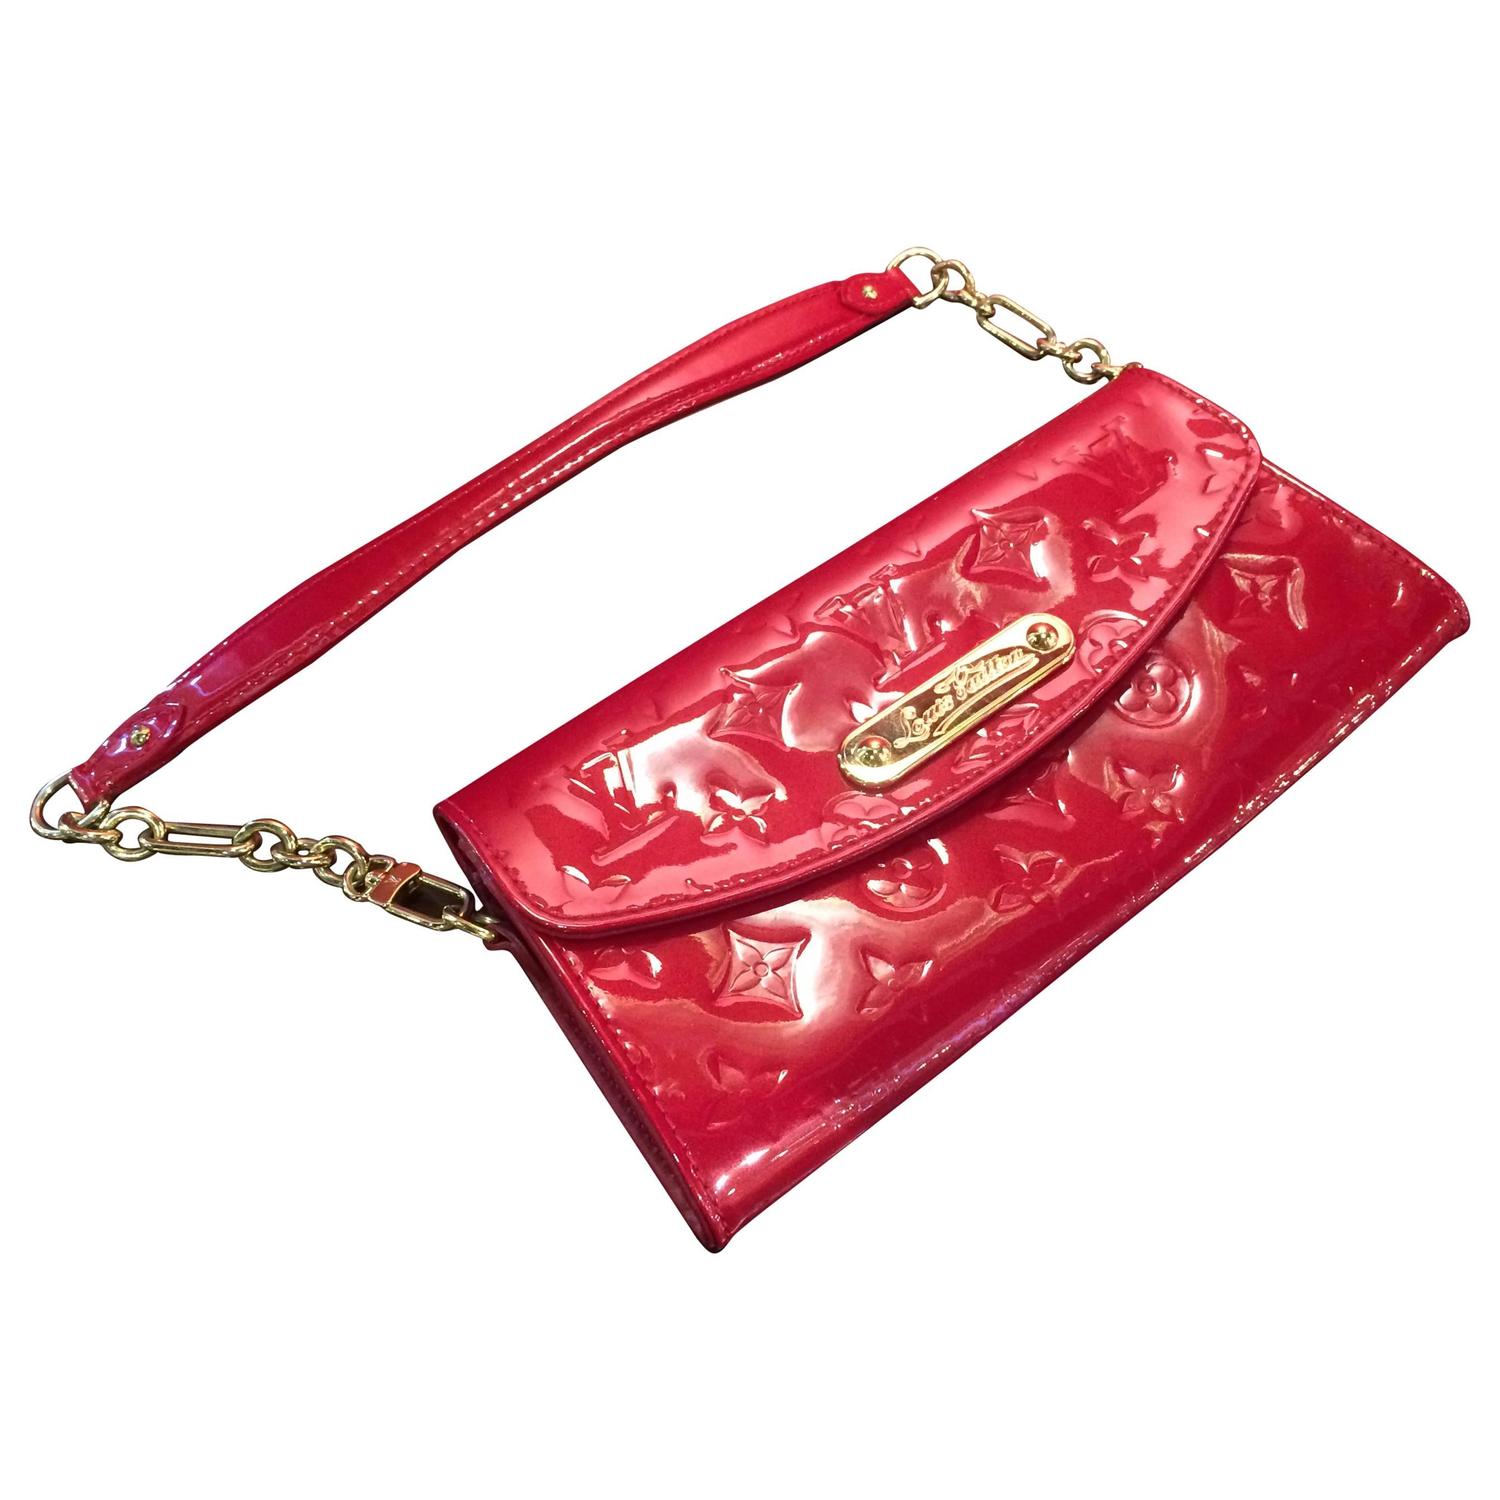 Louis Vuitton Sunset Boulevard Red Vernis Leather evening bag